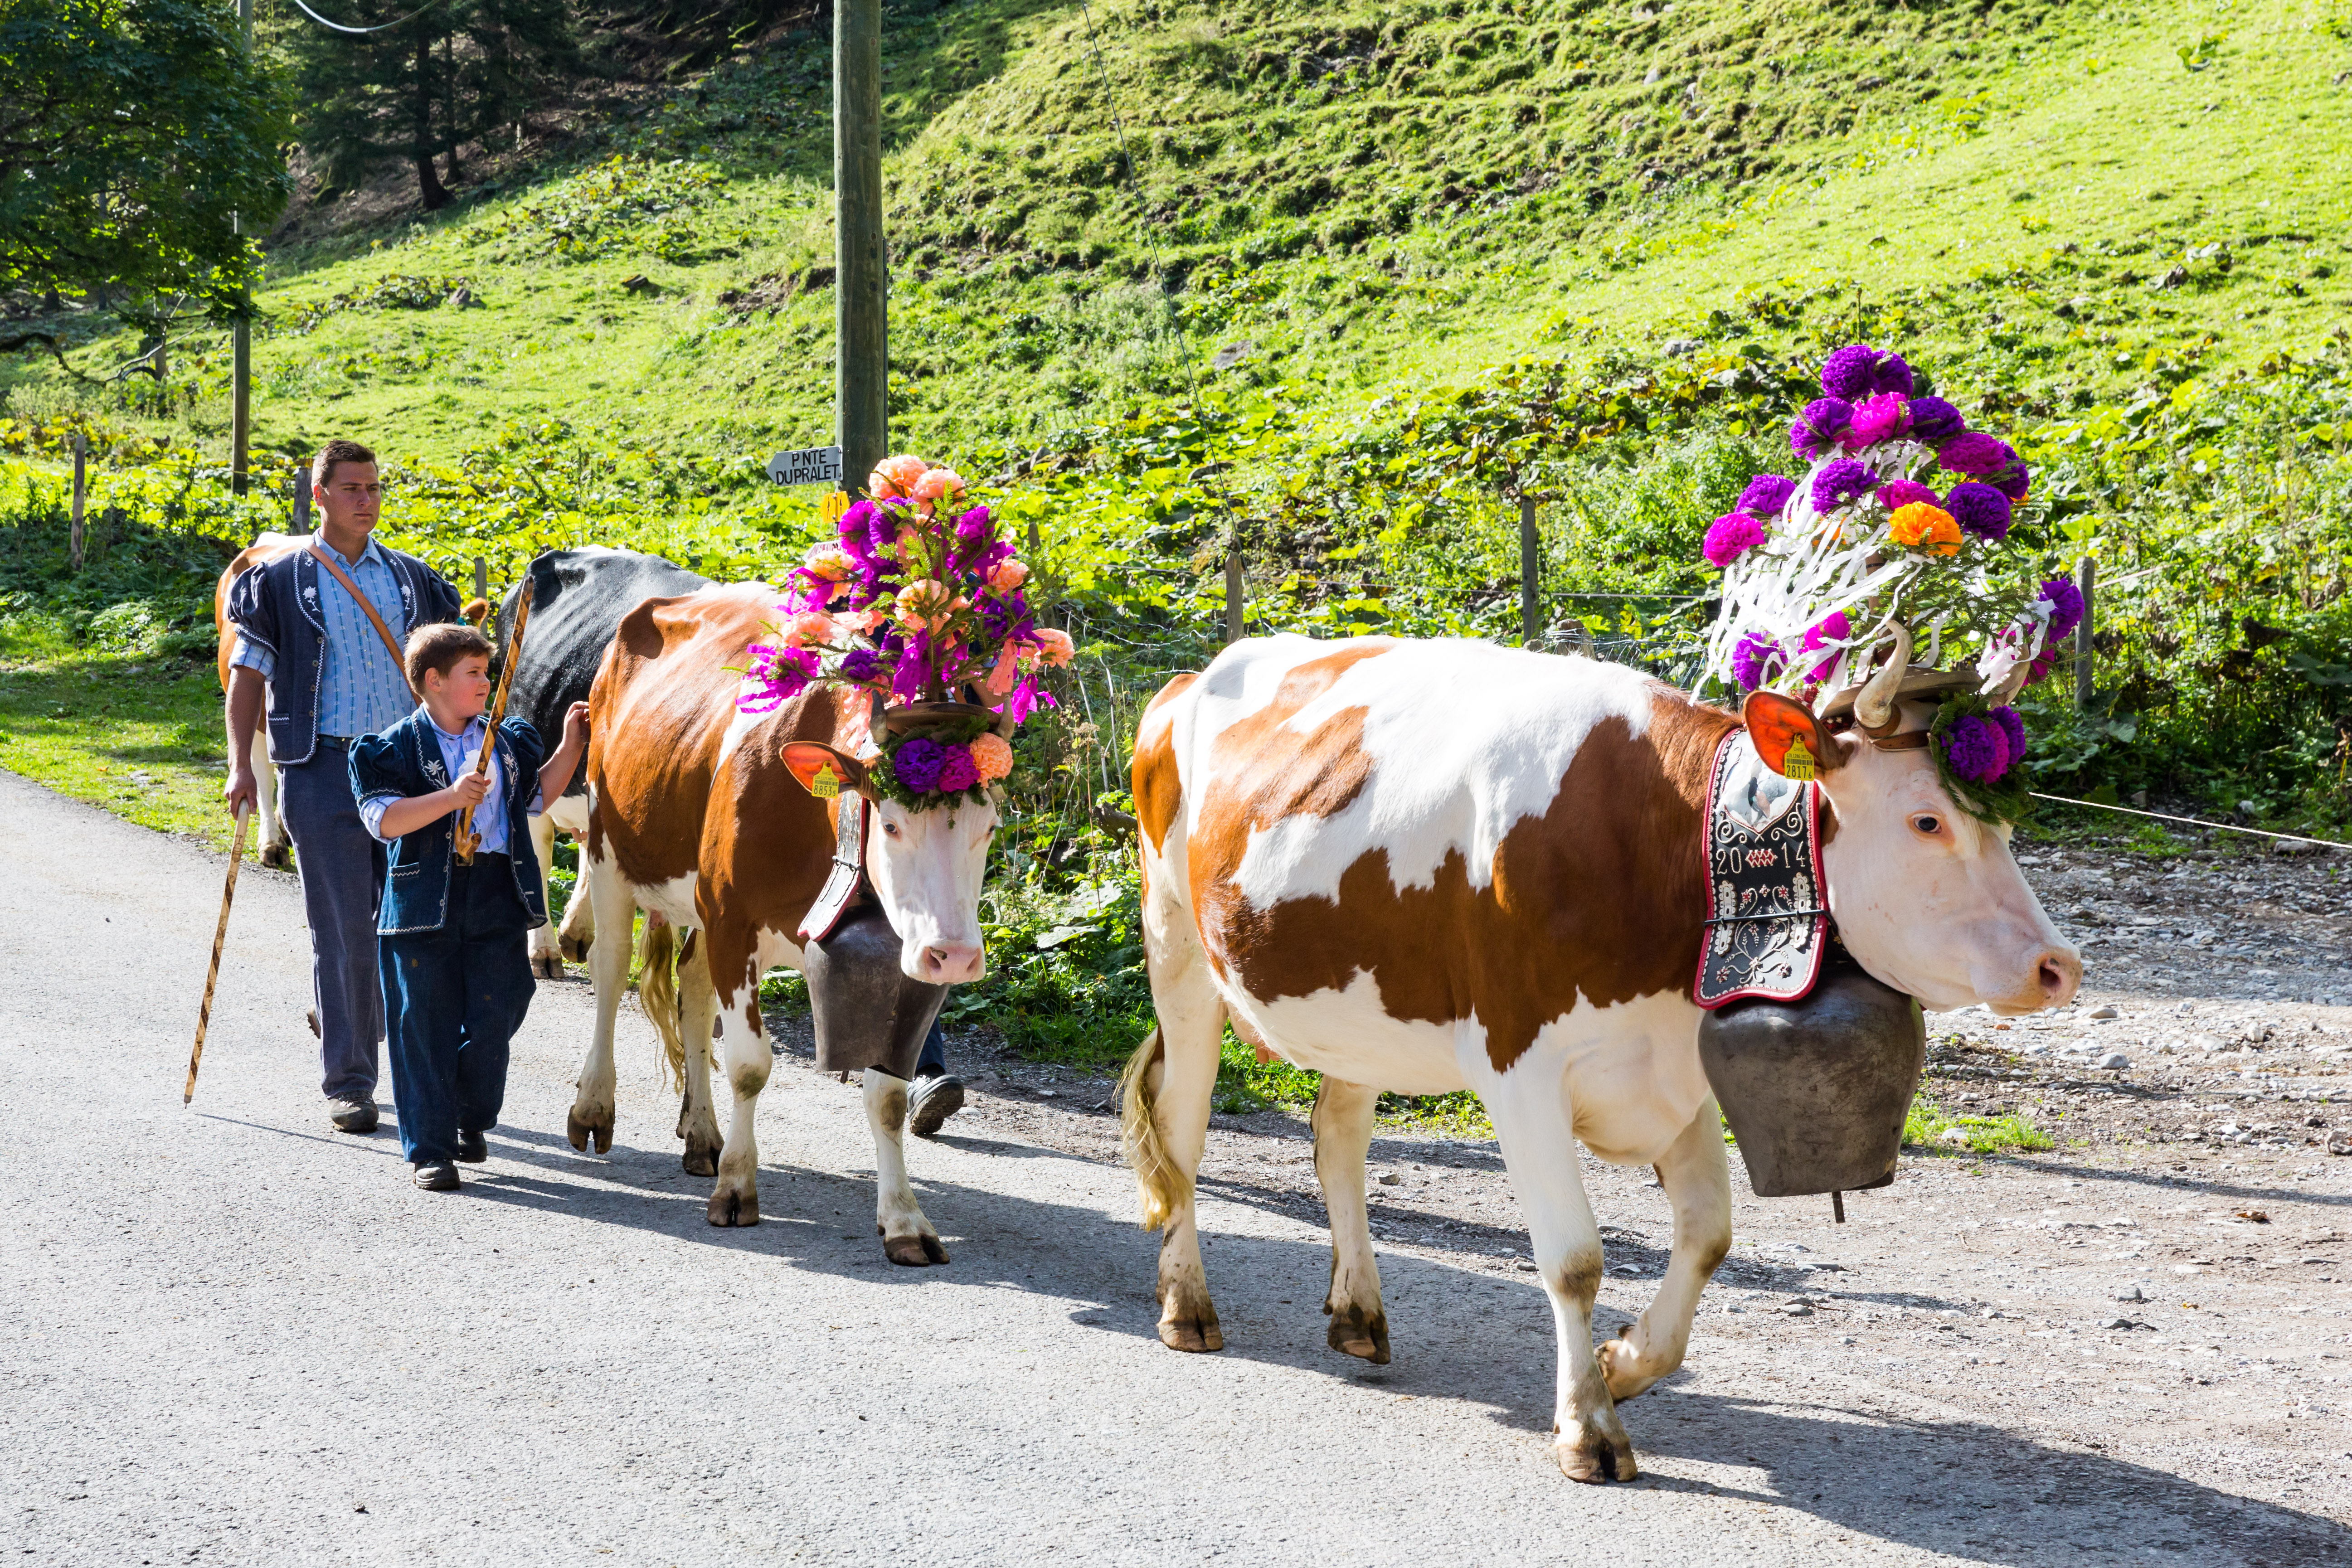 Switzerland's iconic cow | House of Switzerland